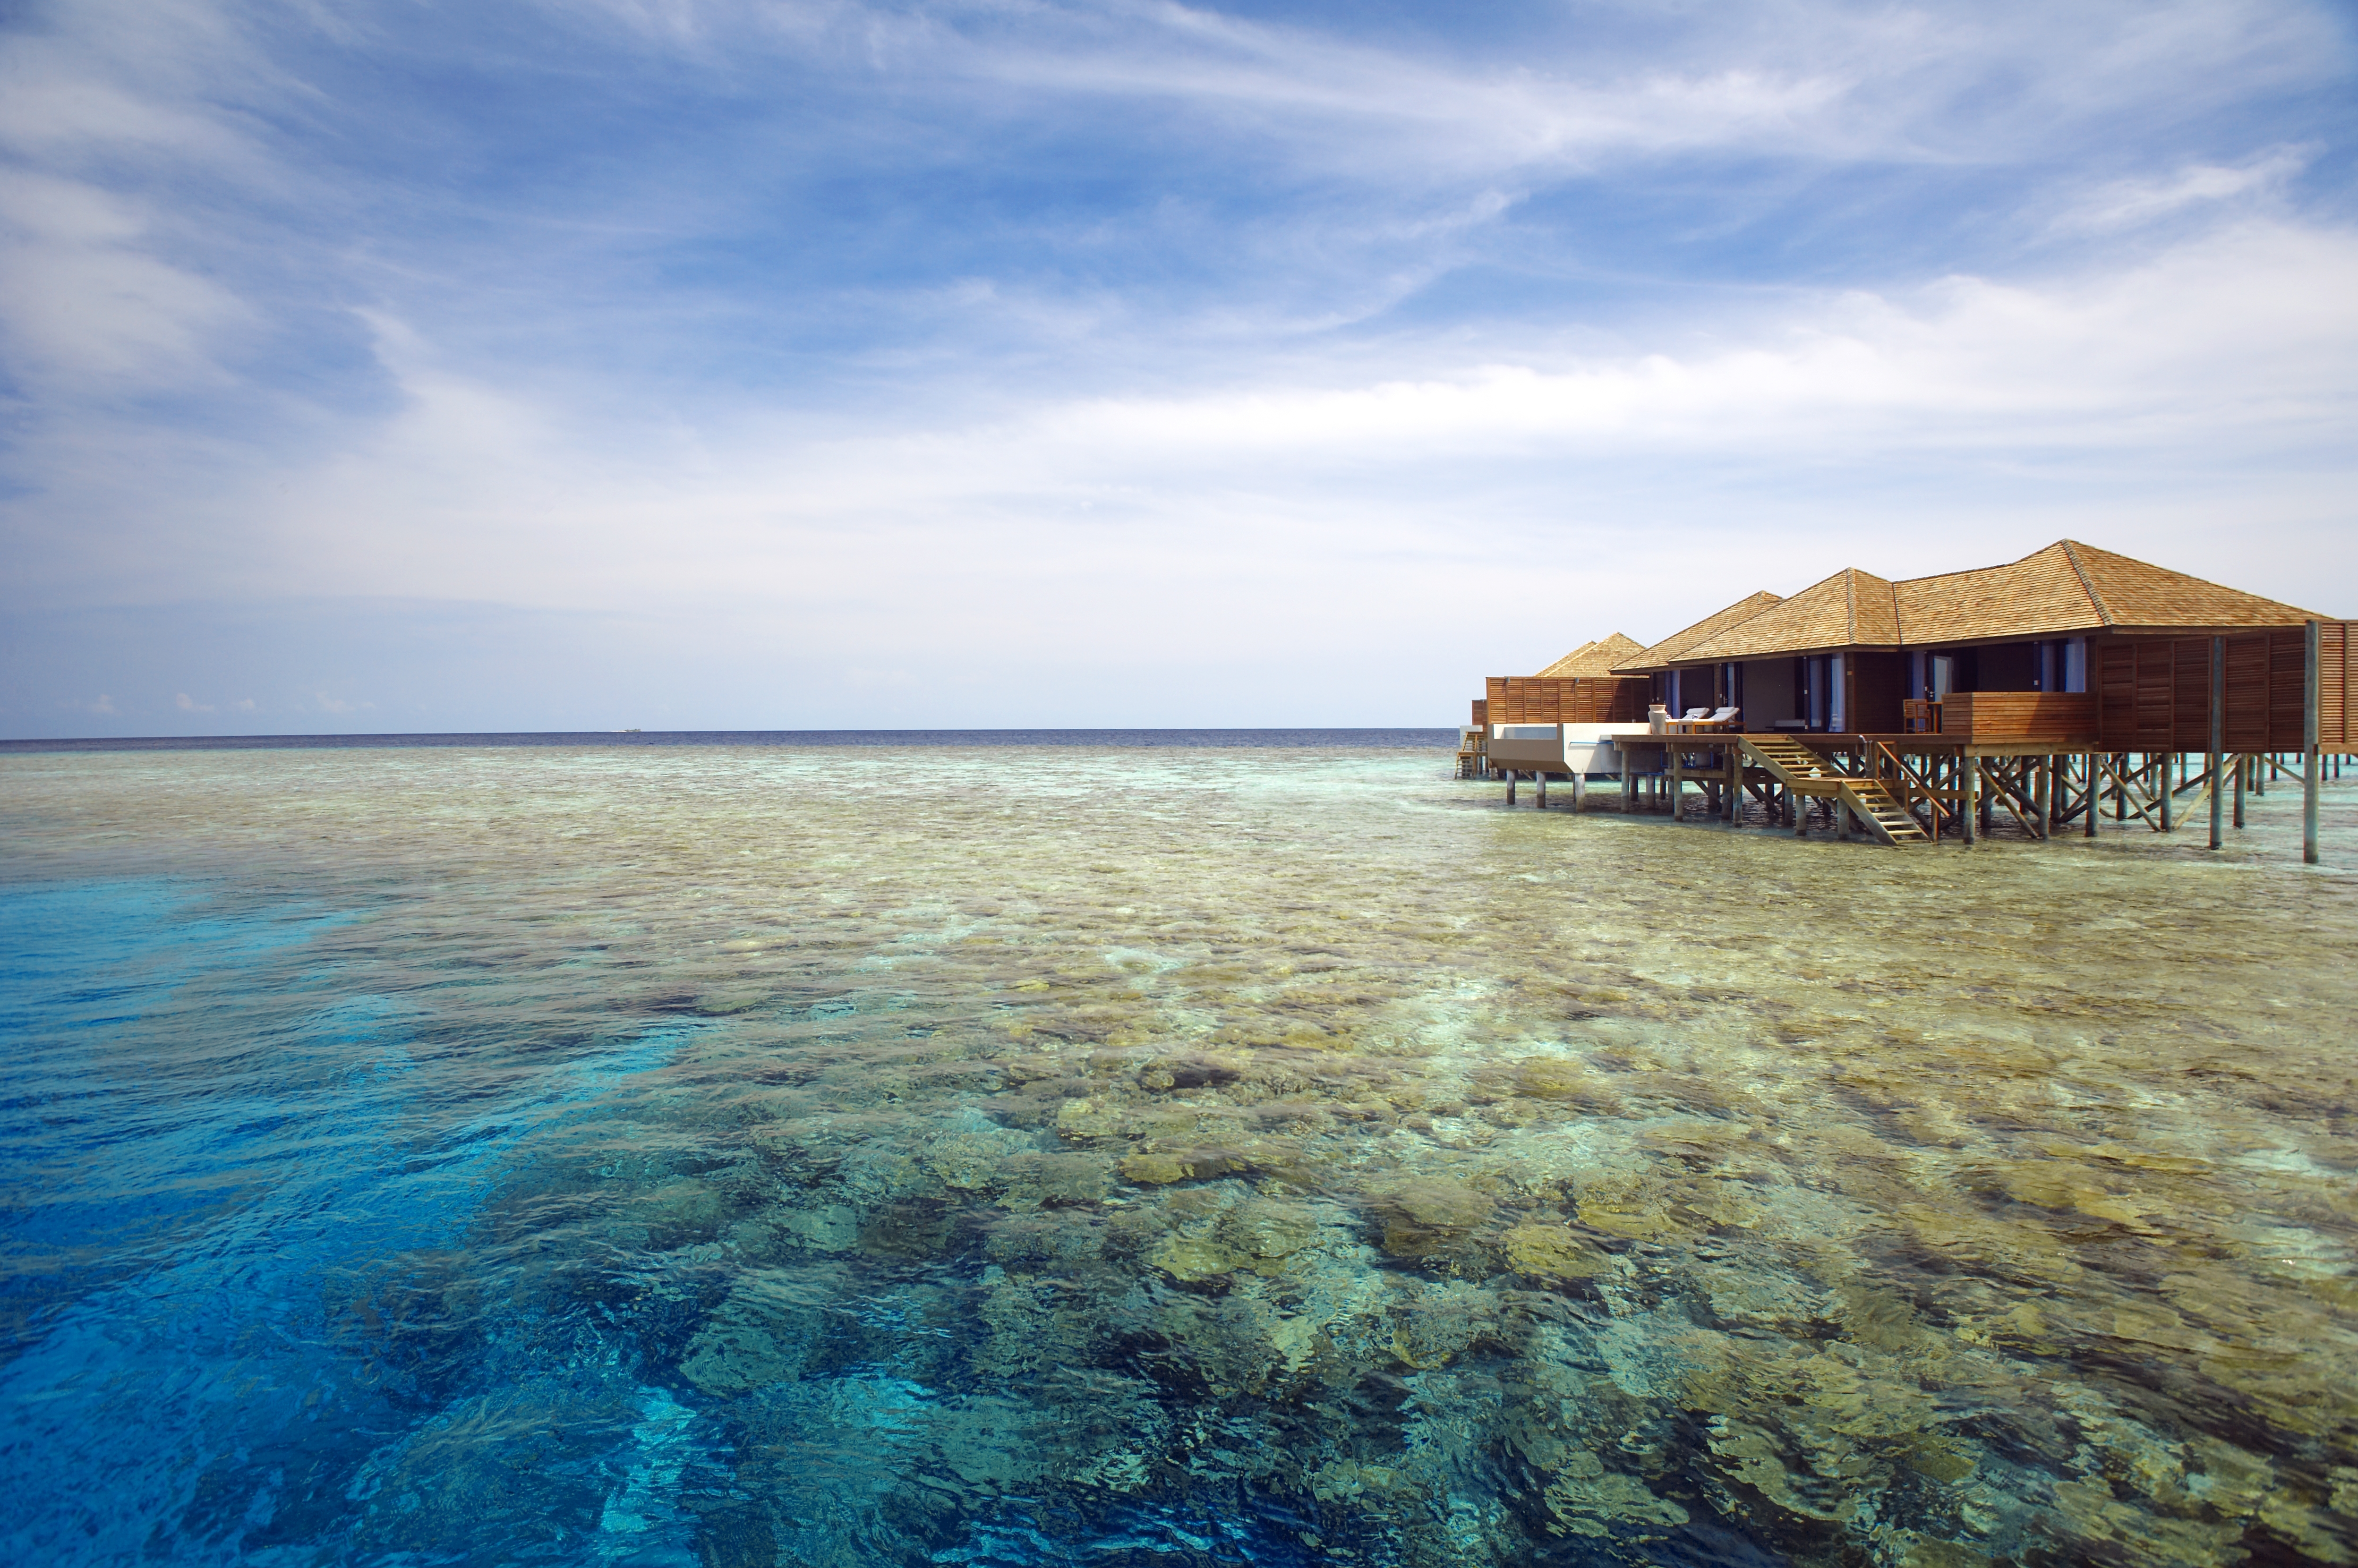 Descarga gratis la imagen Maldivas, Bungalow, Naturaleza, Trópico, Zona Tropical en el escritorio de tu PC